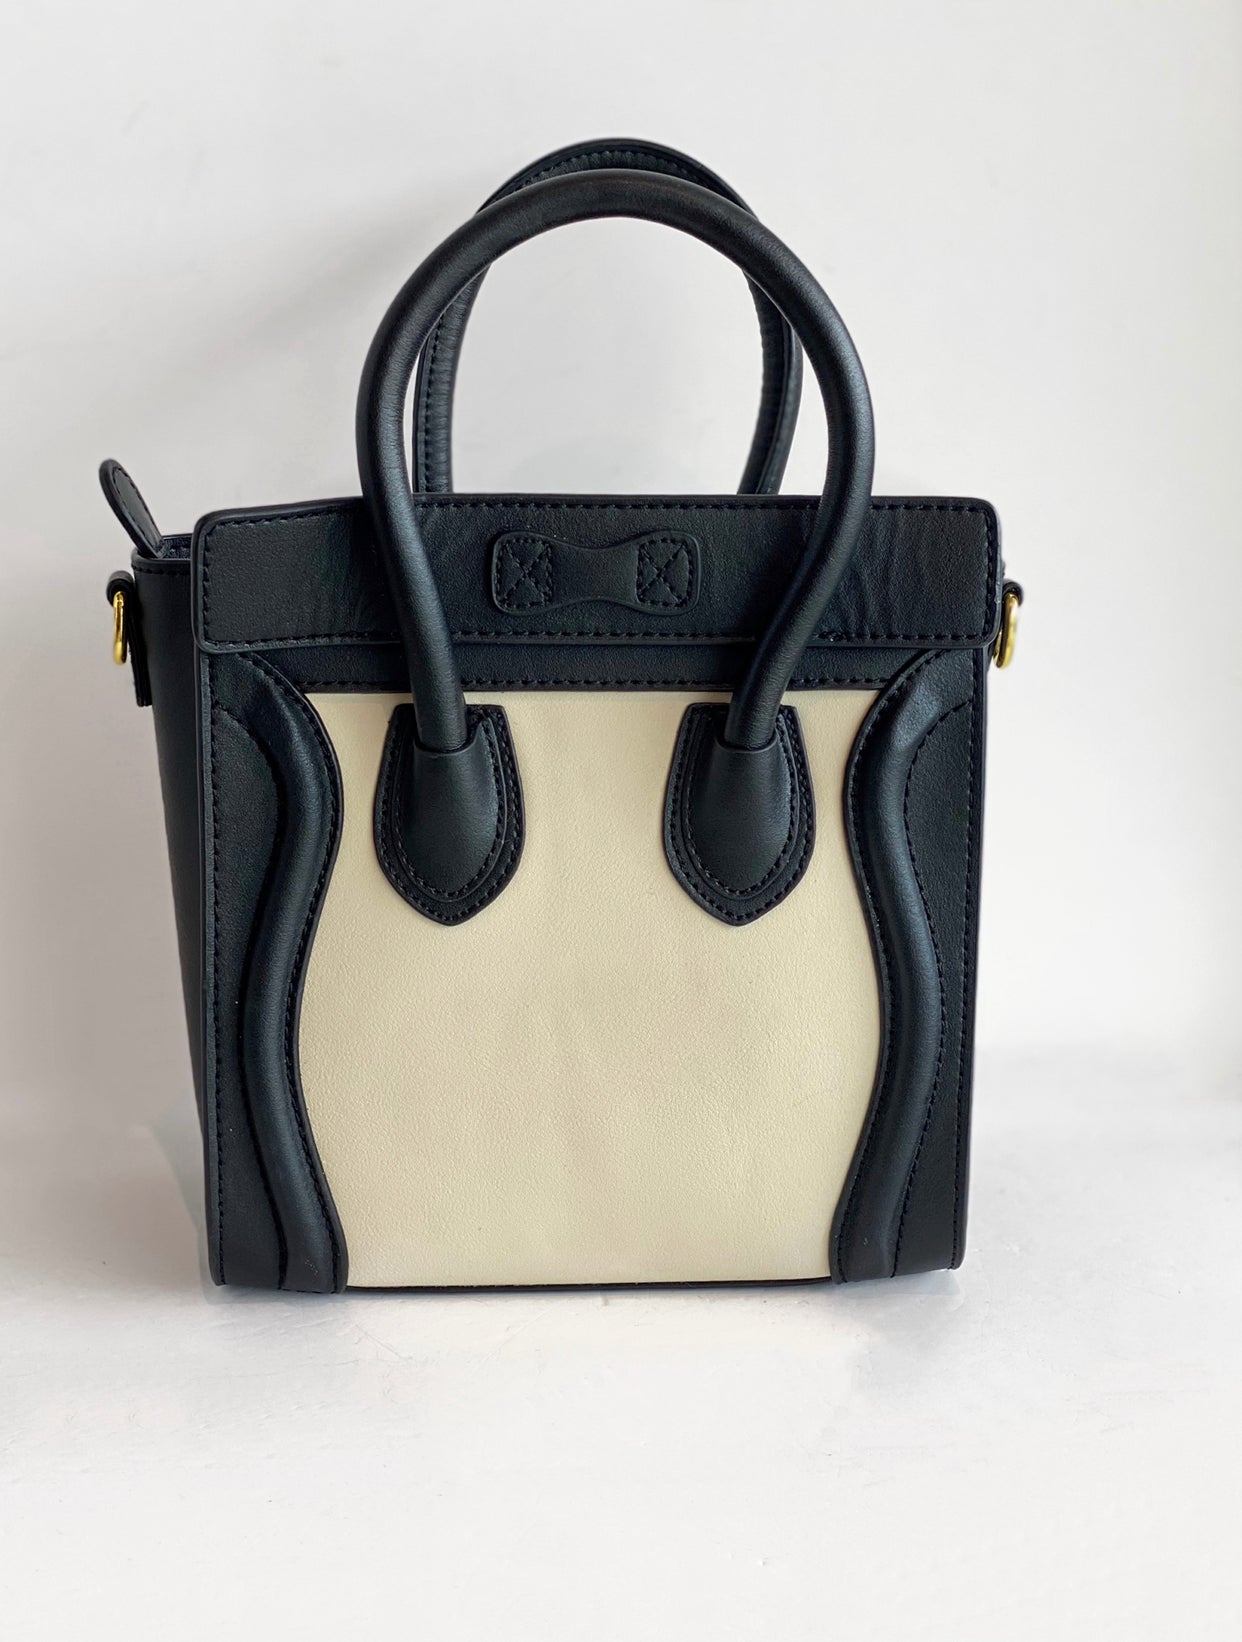 Celine Nano Luggage tote Black and Ivory Back of Bag